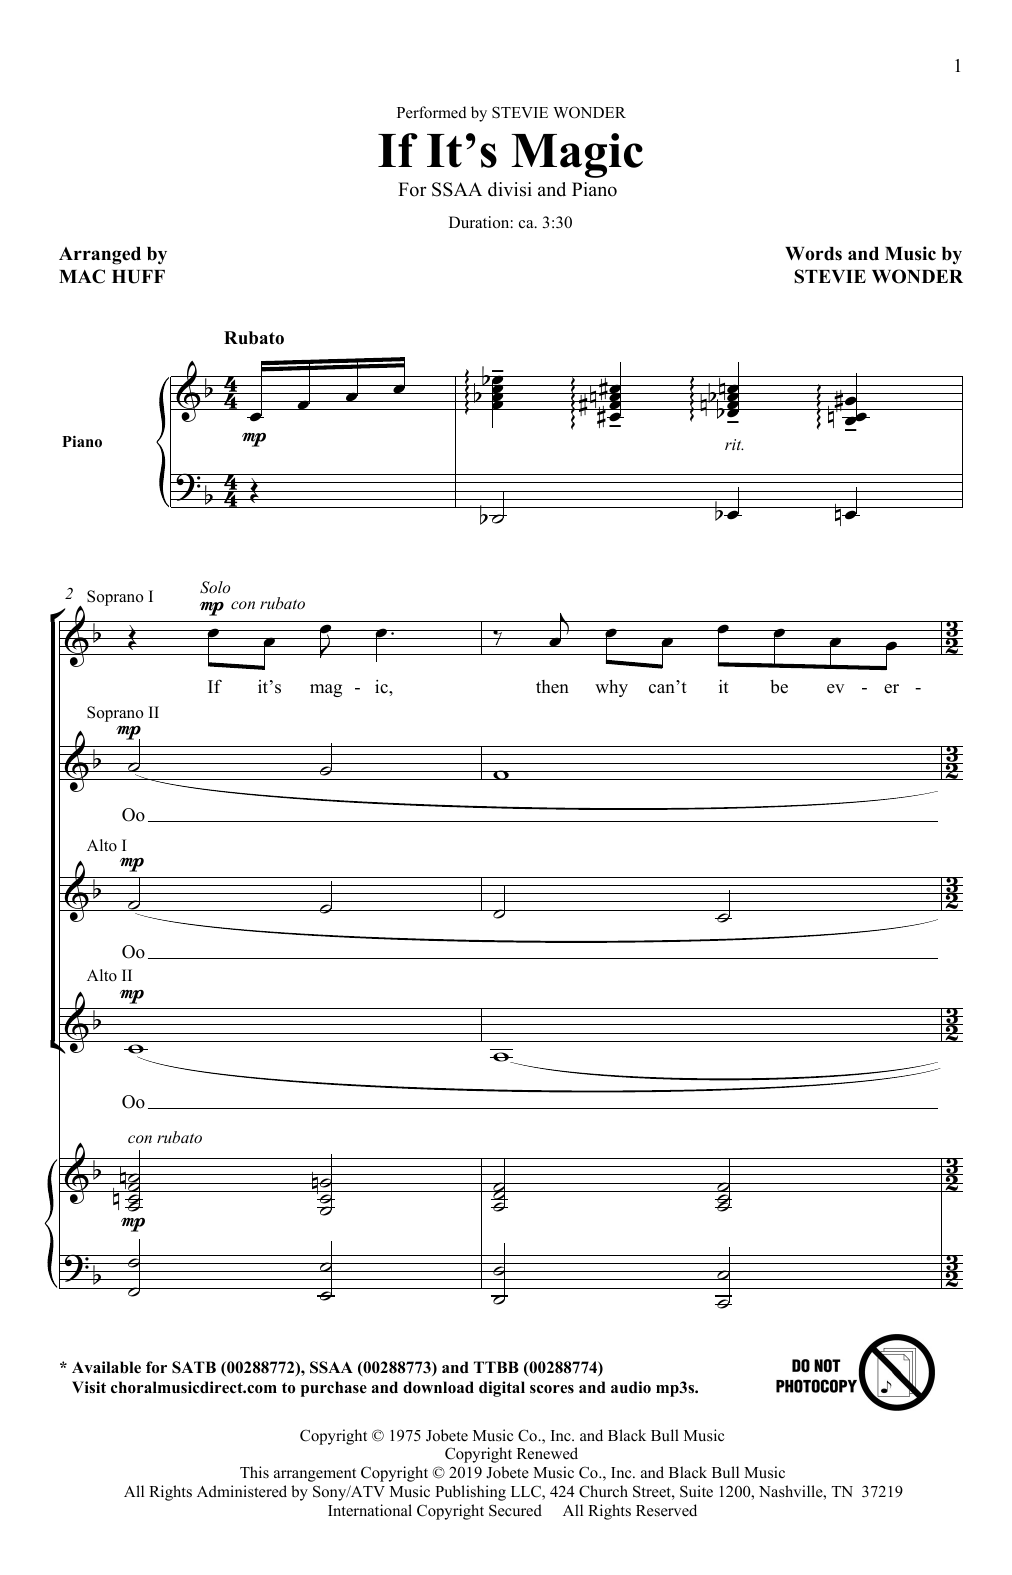 Stevie Wonder If It's Magic (arr. Mac Huff) sheet music notes and chords arranged for SSA Choir